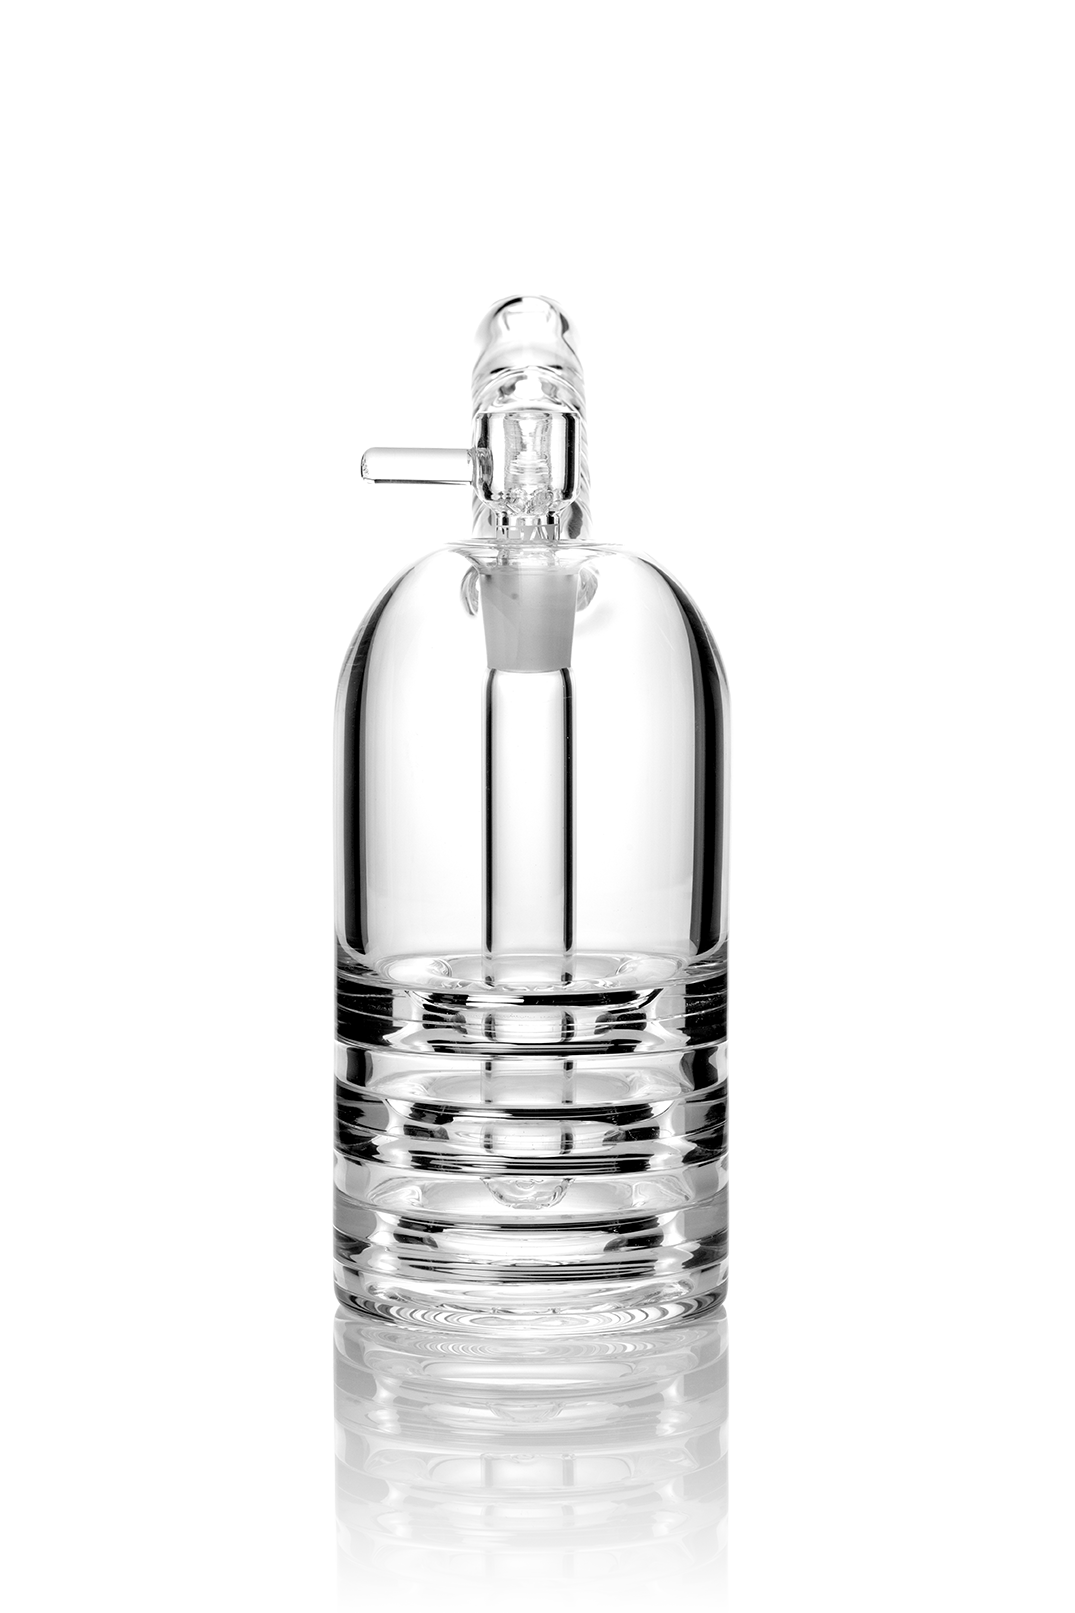 GRAV Upline Upright Bubbler with Slit-Diffuser Percolator, Clear Borosilicate Glass, Front View